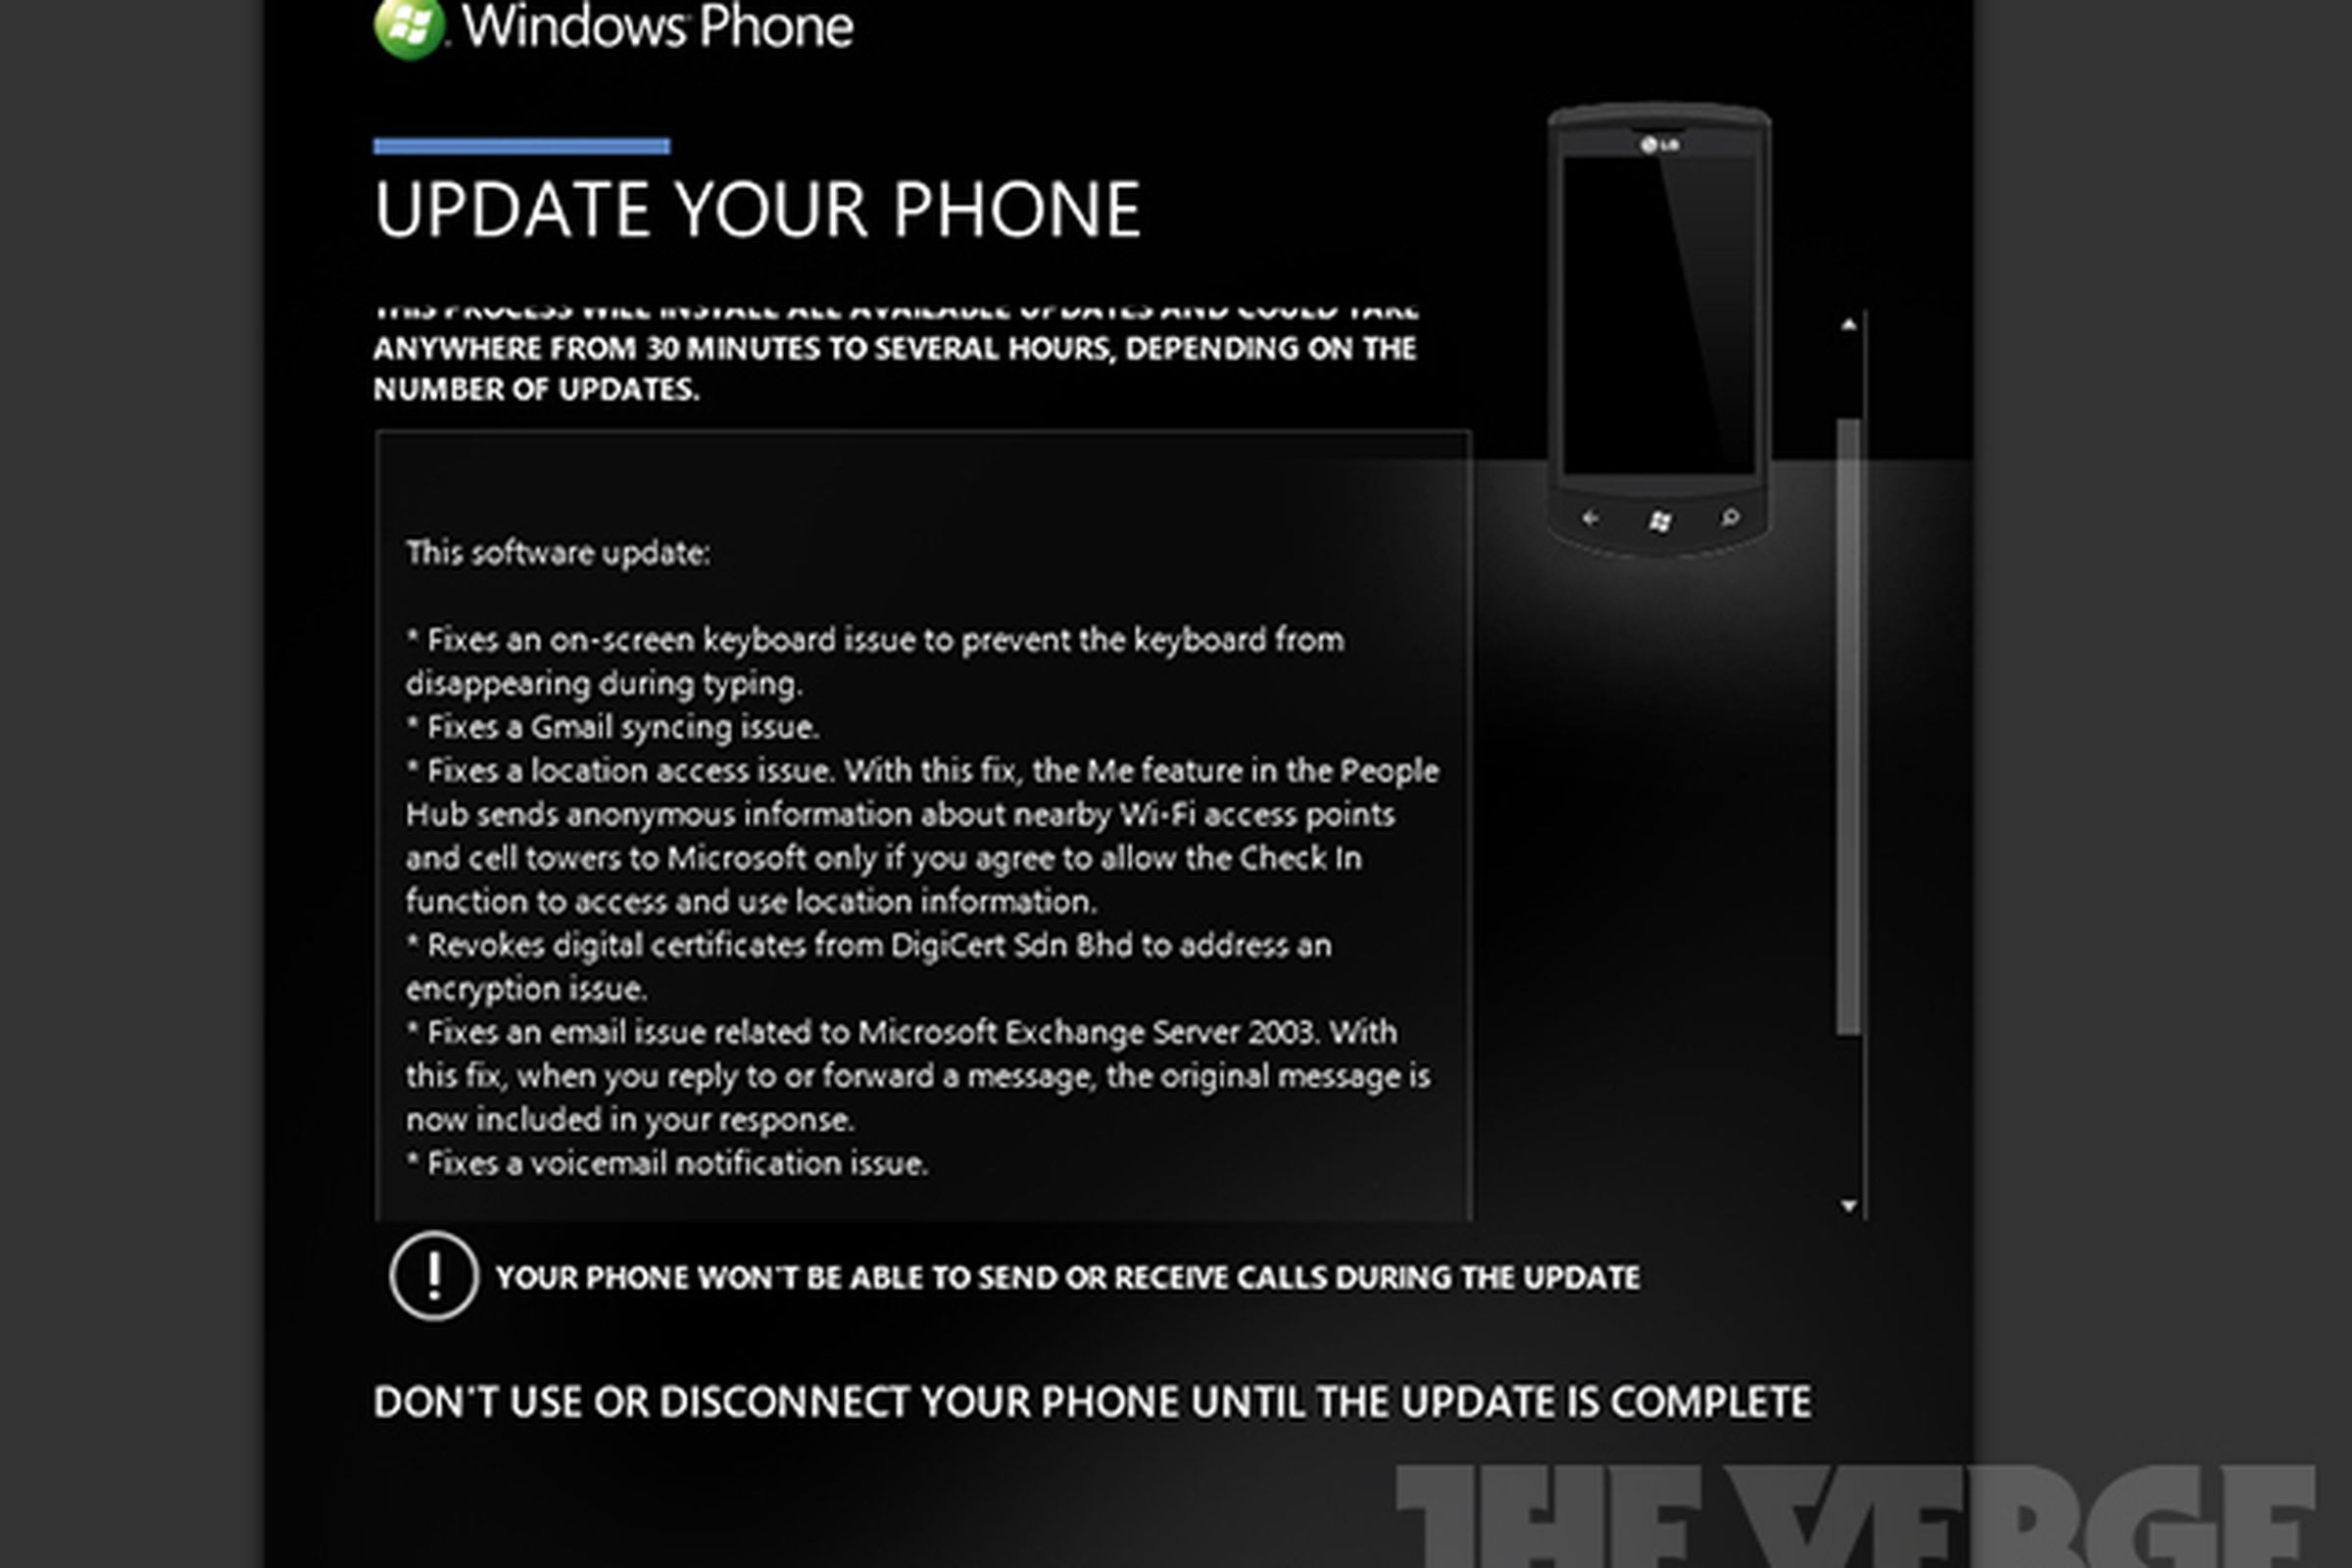 Windows Phone 8107 update